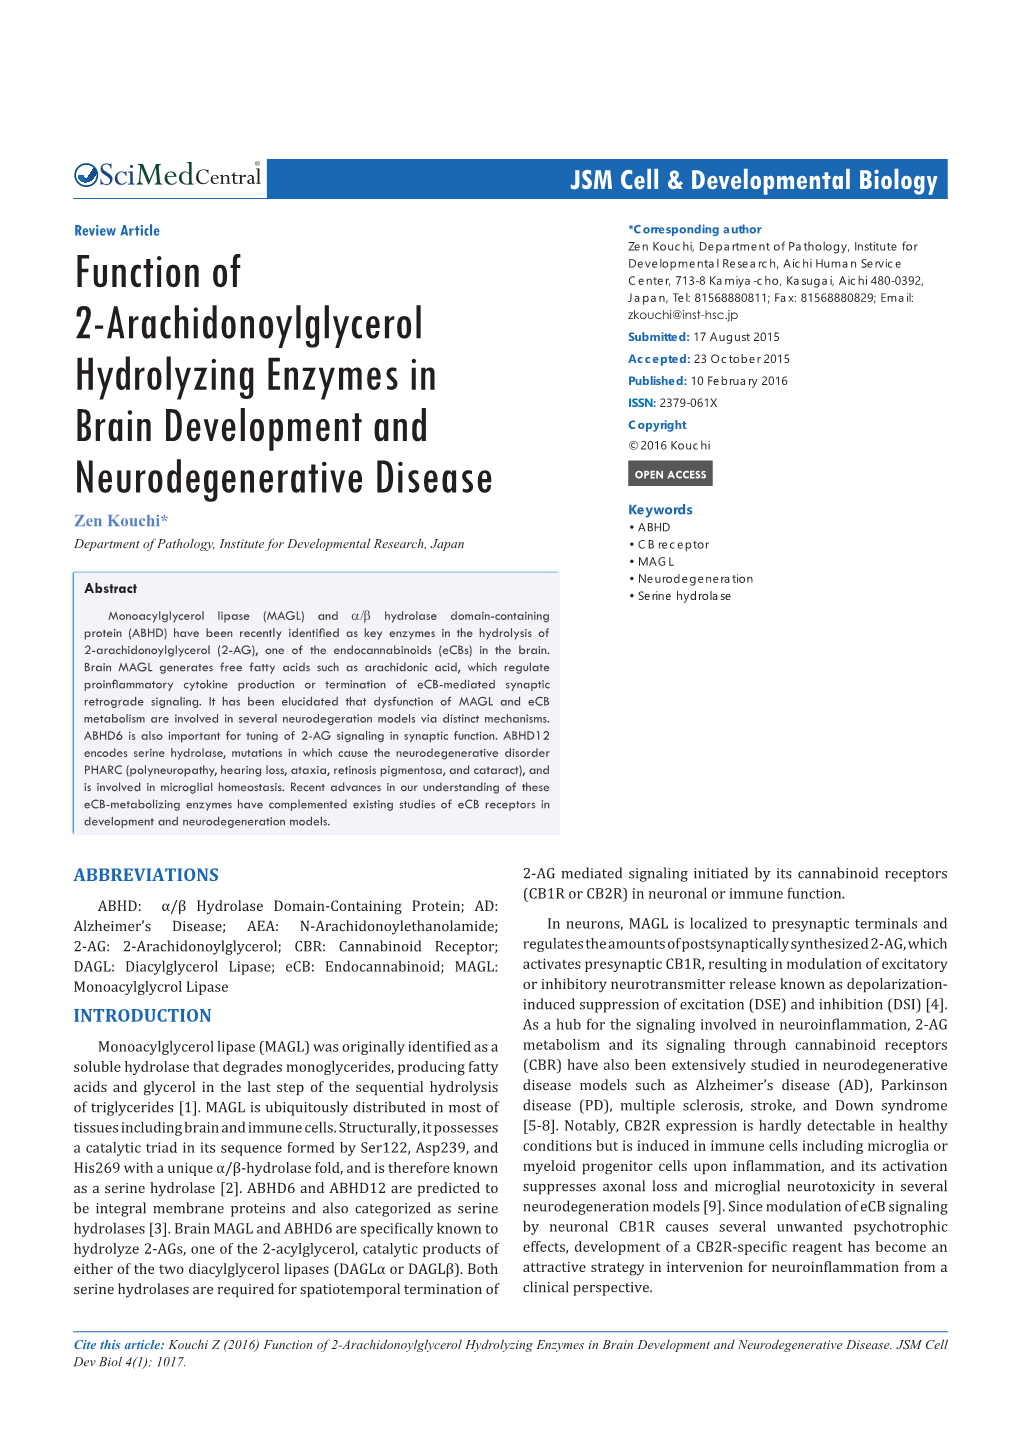 Function of 2-Arachidonoylglycerol Hydrolyzing Enzymes in Brain Development and Neurodegenerative Disease